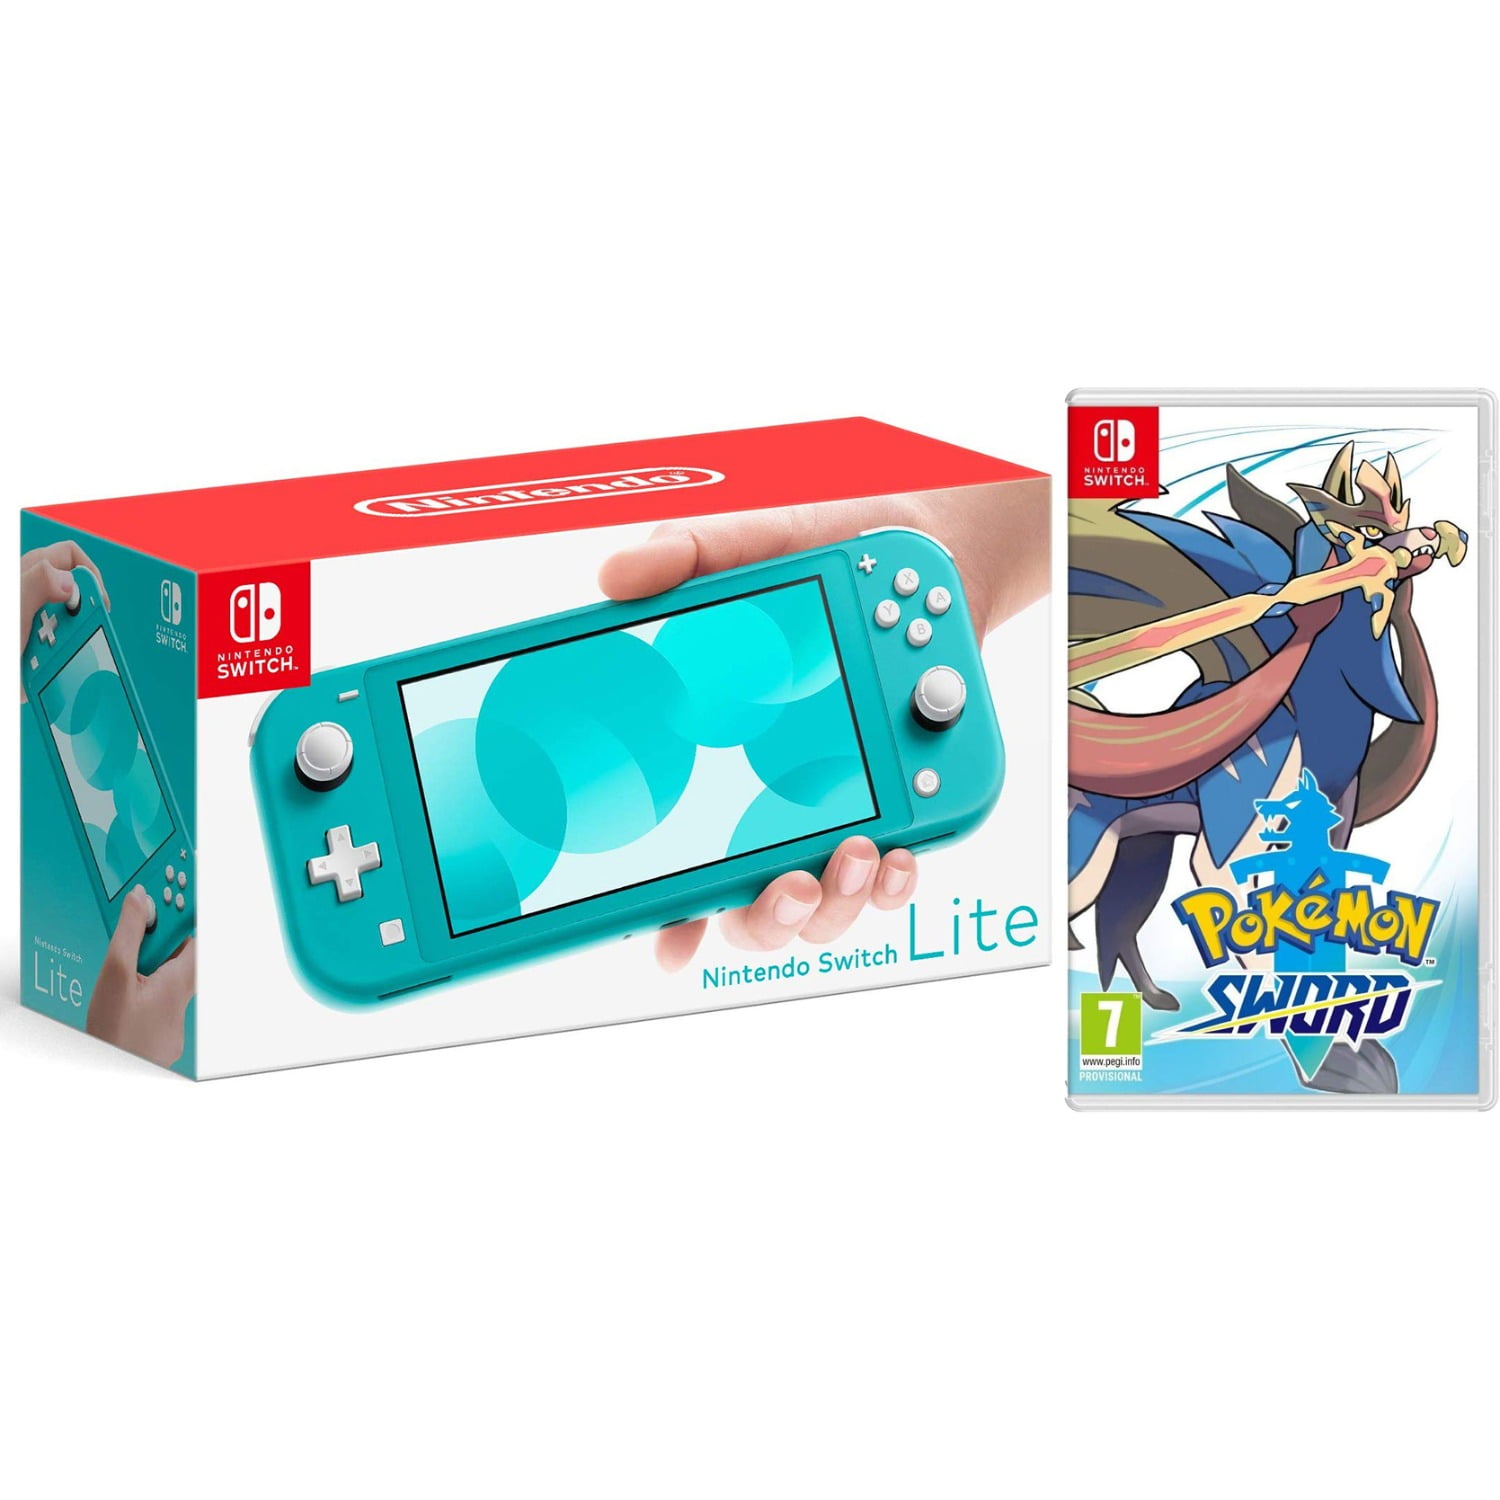 Nintendo Switch Lite Turquoise 32gb System Pokemon Sword Bundle Region Free Walmart Com Walmart Com